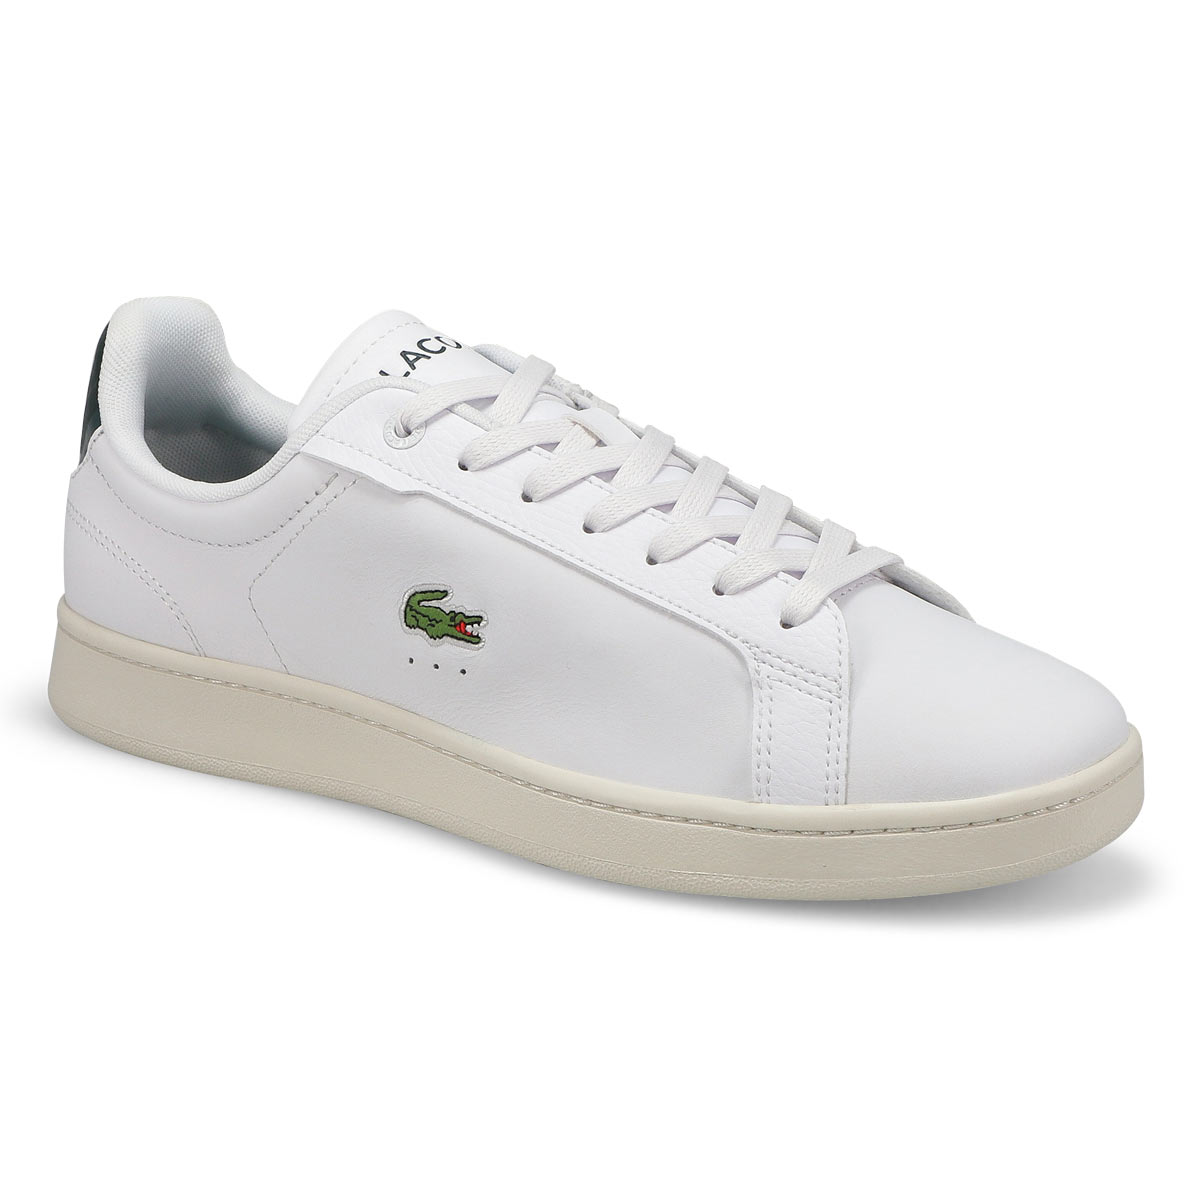 Mens Carnaby Pro Fashion Sneaker - White/Dark Green